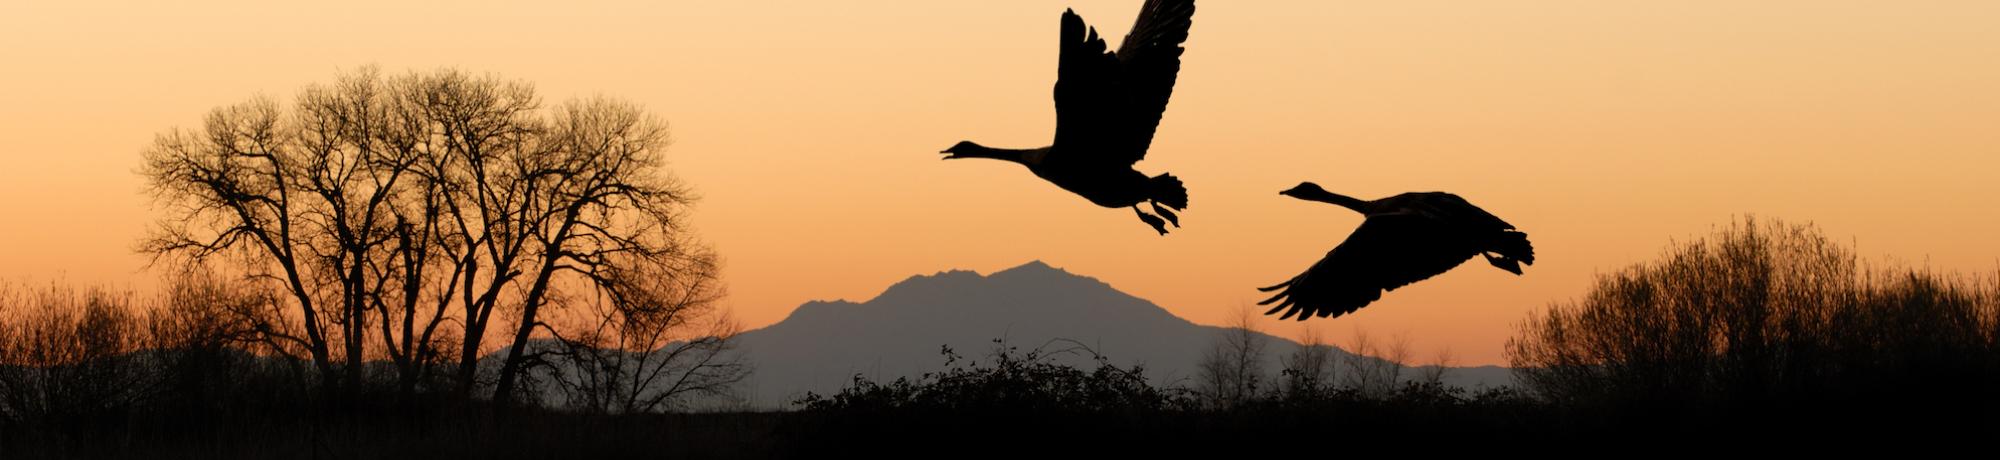 silhouette of birds flying at dusk